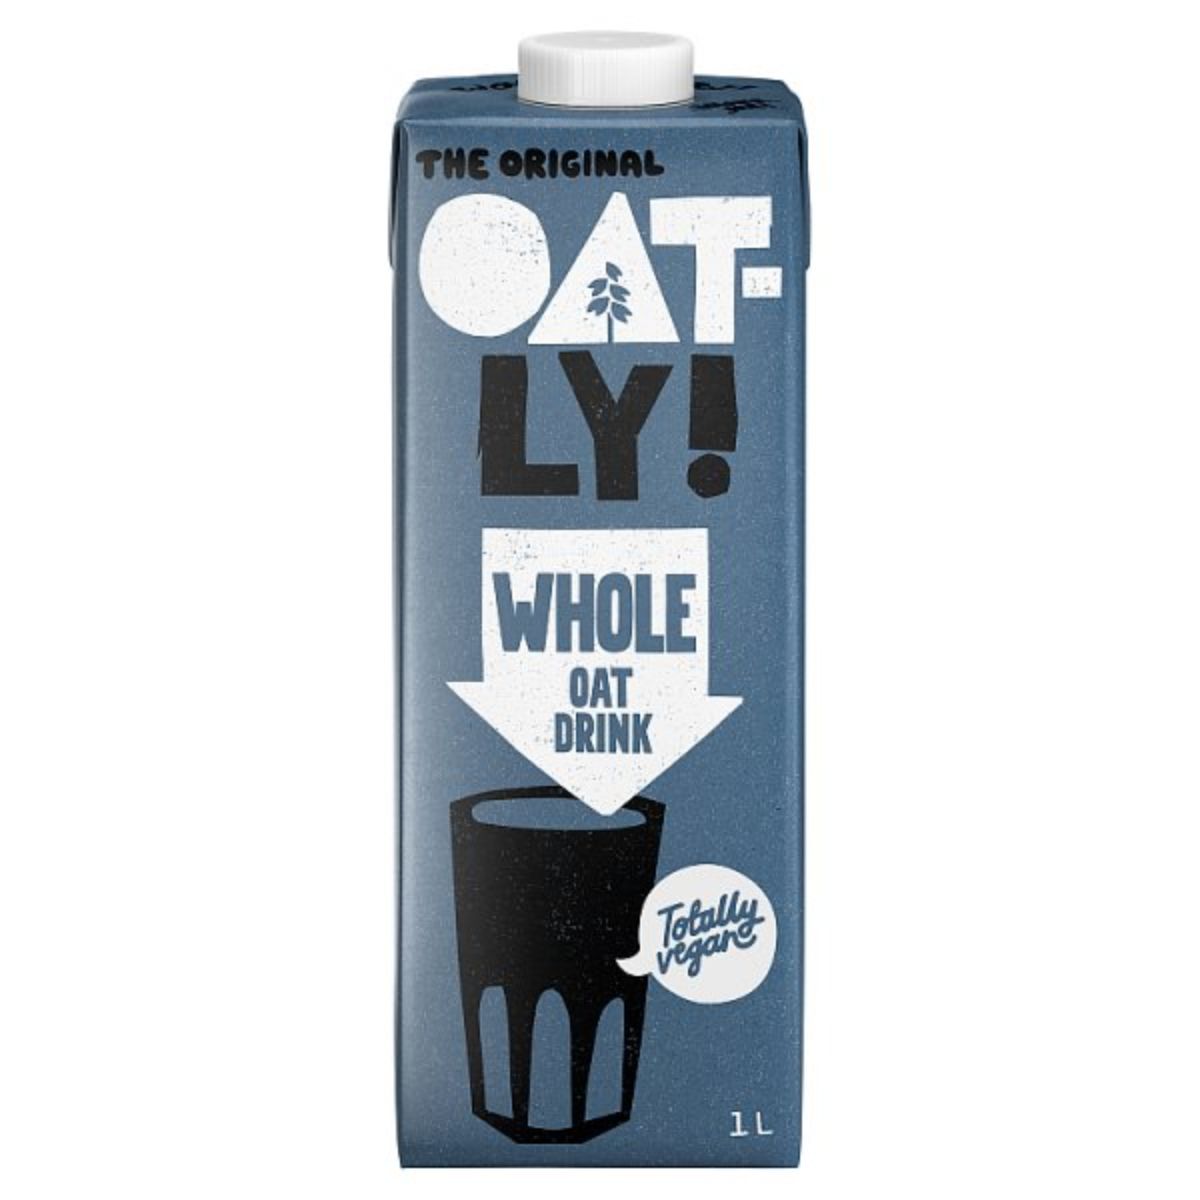 The original Oatly Whole Milk Drink.